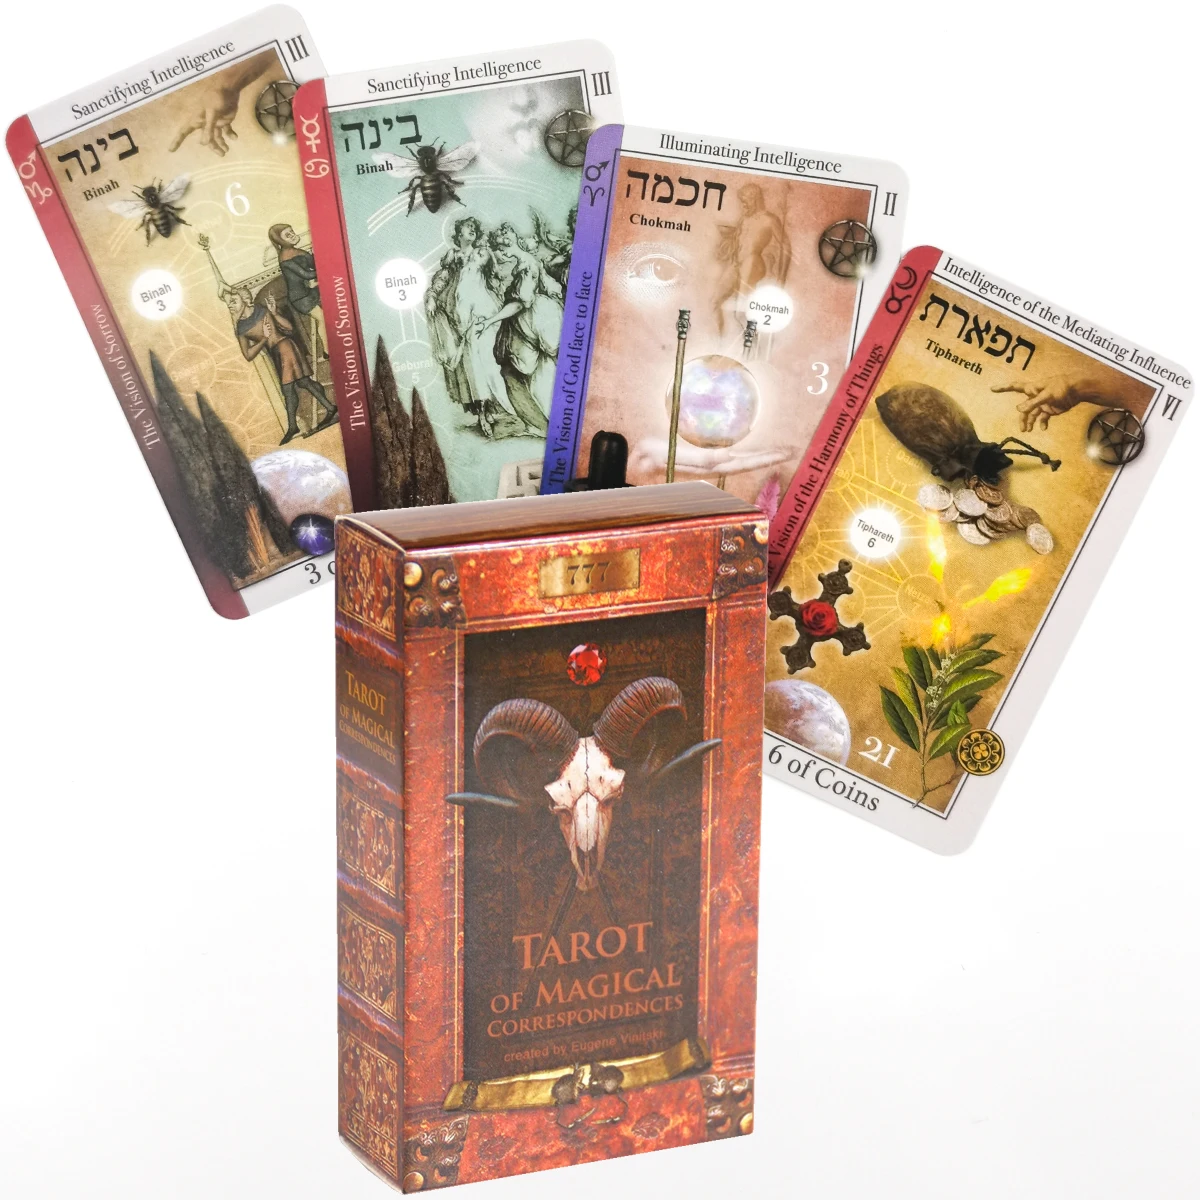 

Tarot Of Magical Correspondences Kabbalistic Cards Unique Occult Deck Tarot Reading Magic Prediction E Vinitski Mysterious